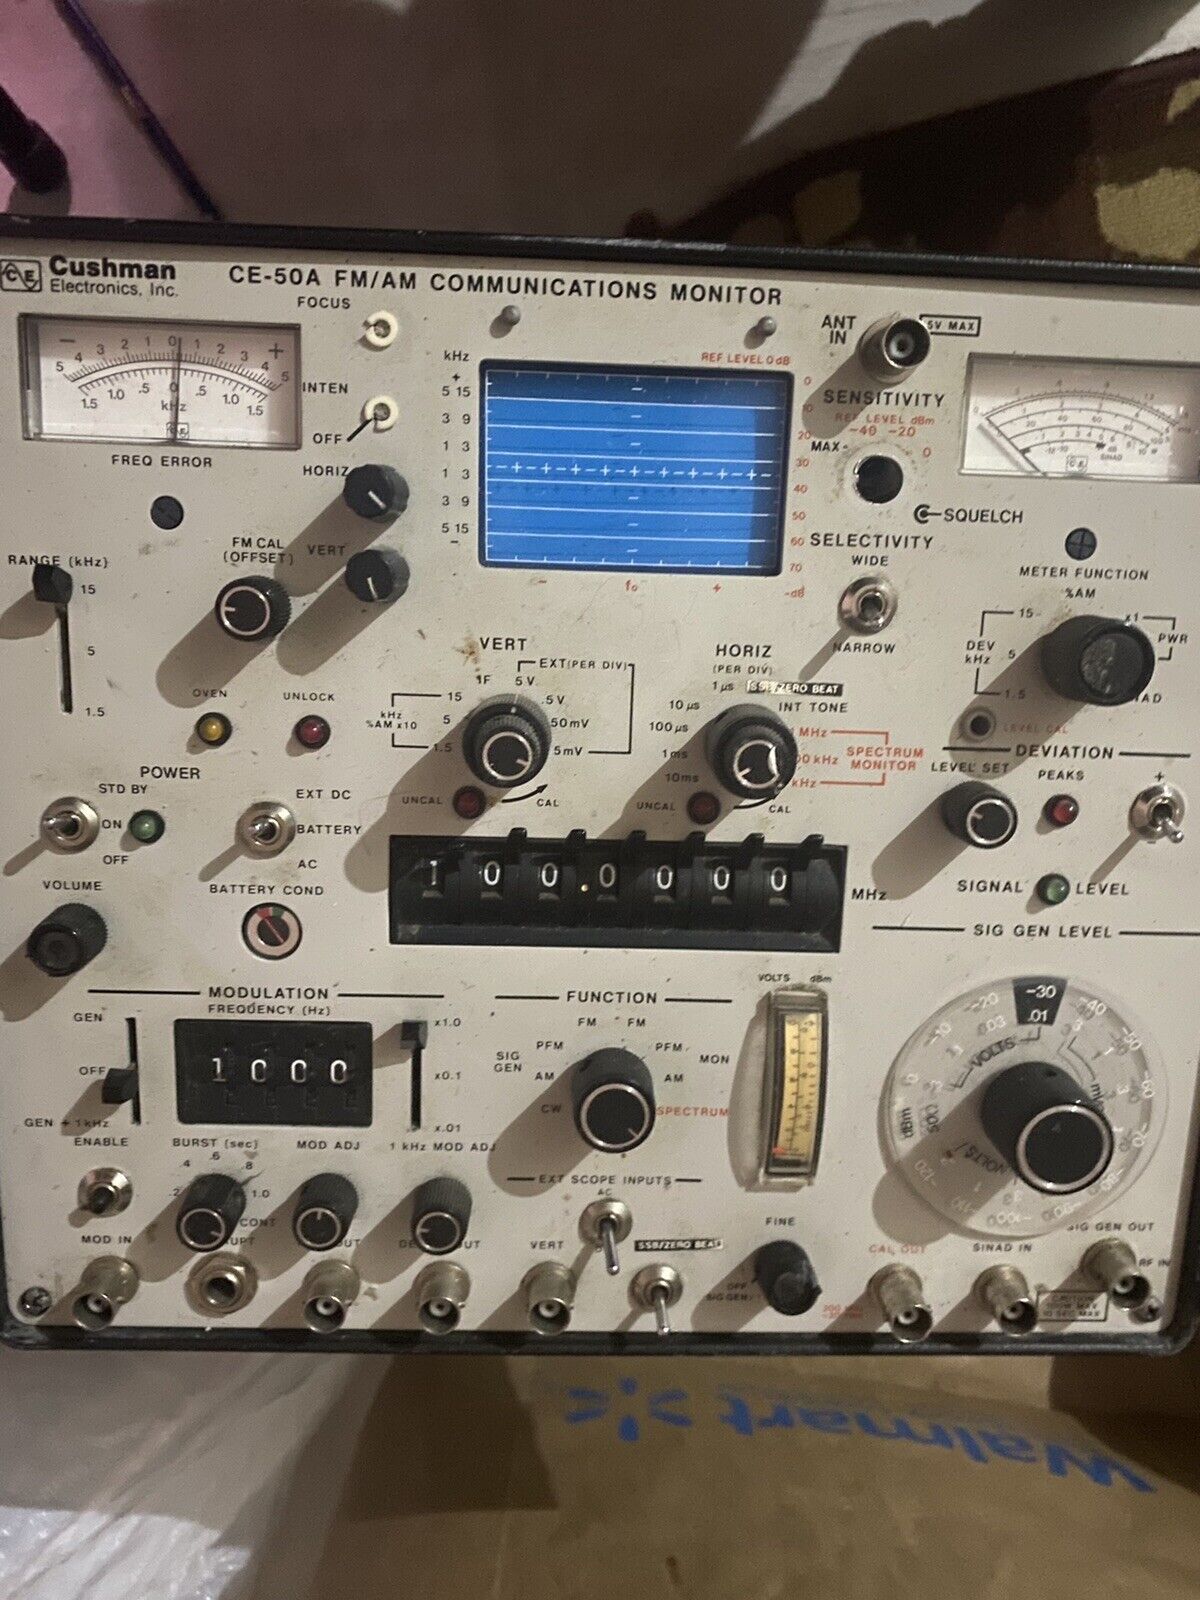 cushman communications monitor CE-50A FM/AM